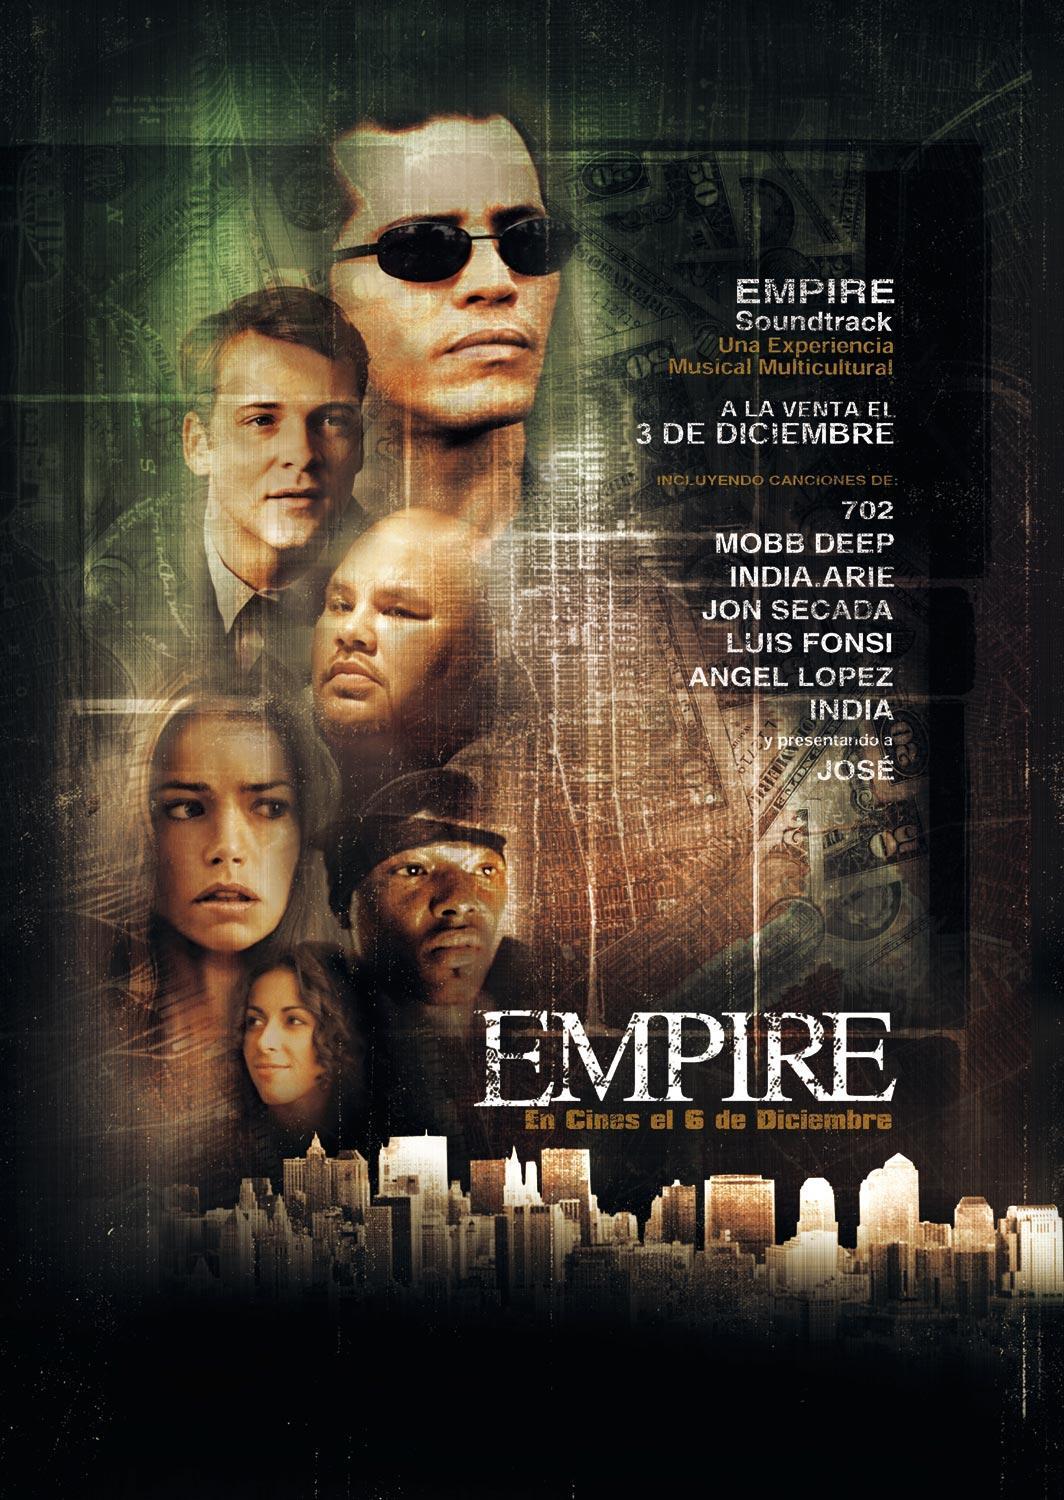 The new empire movie